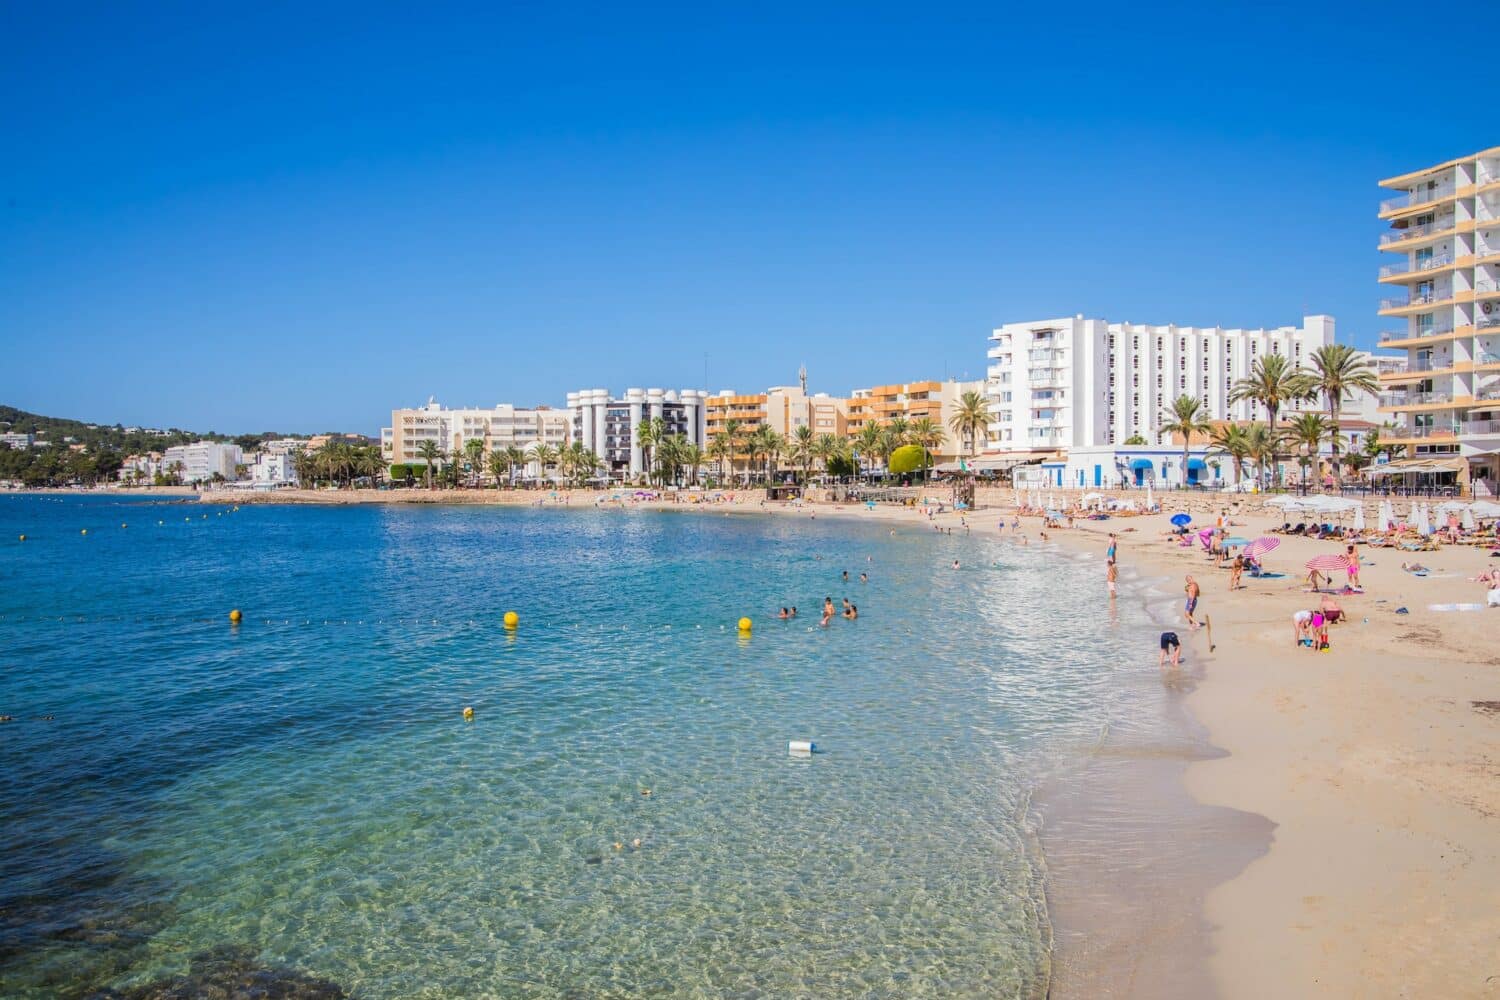 Praia de Las Salinas - A praia preferida dos famosos em Ibiza